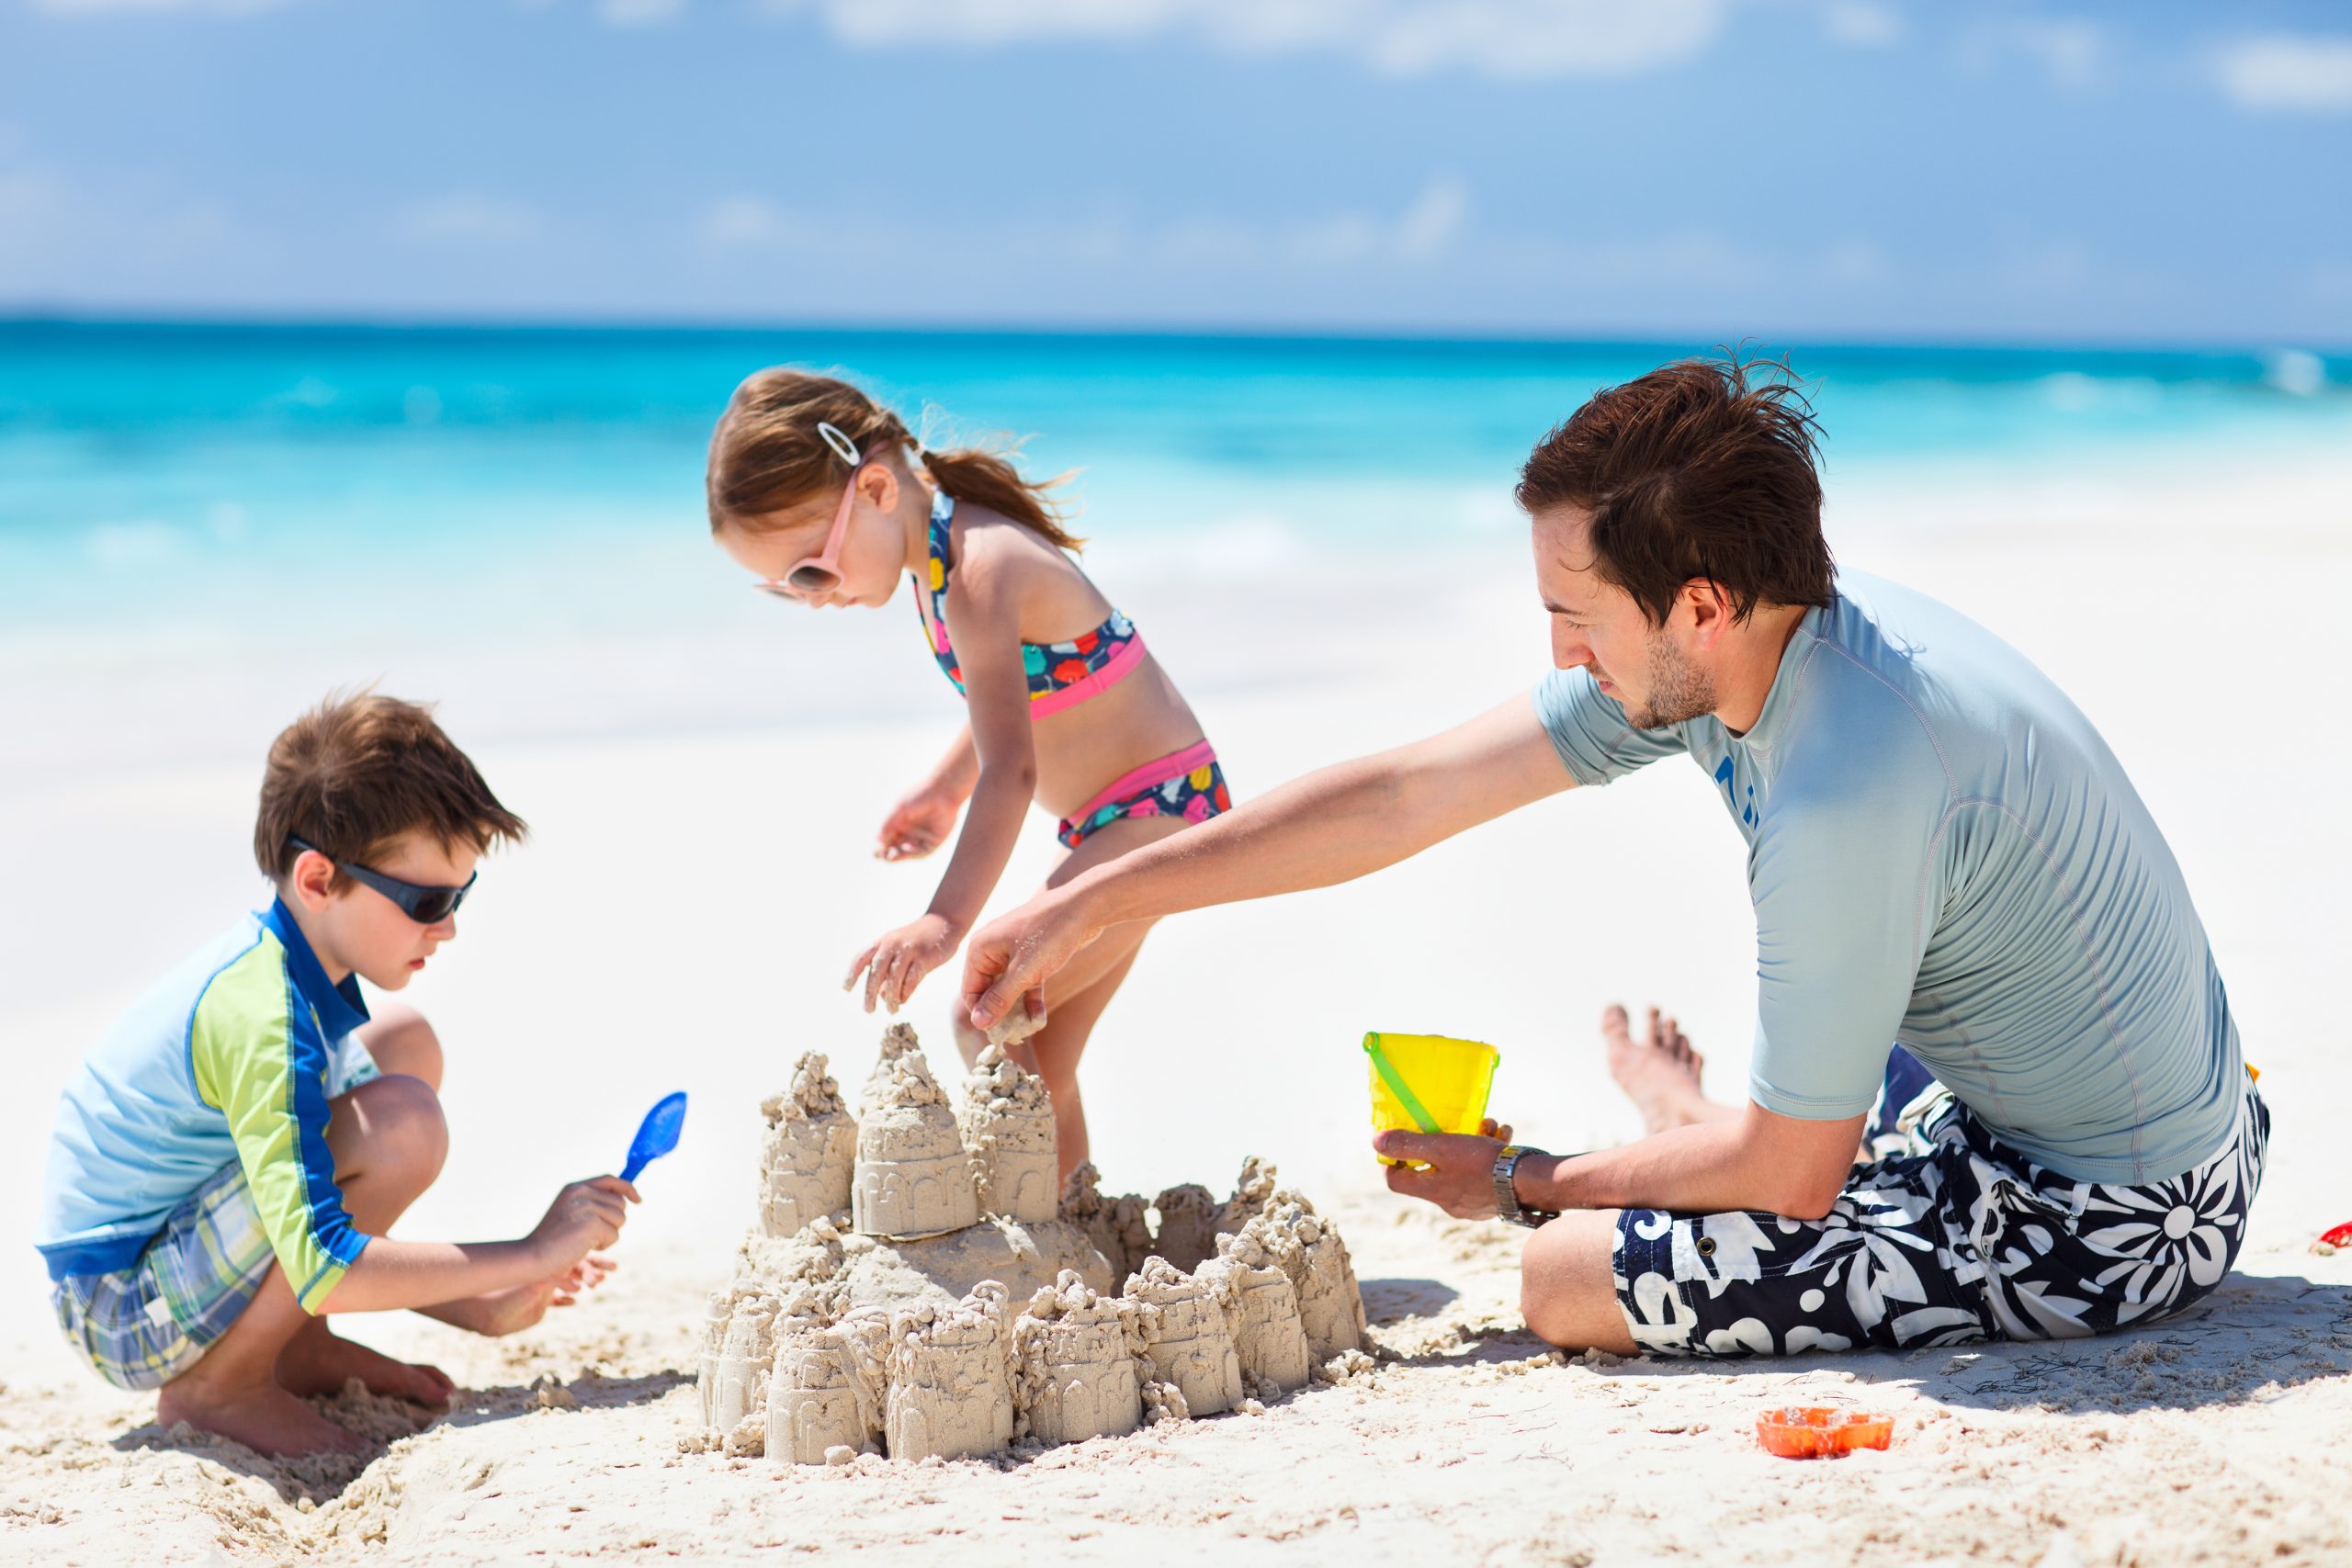 beach family travel tips